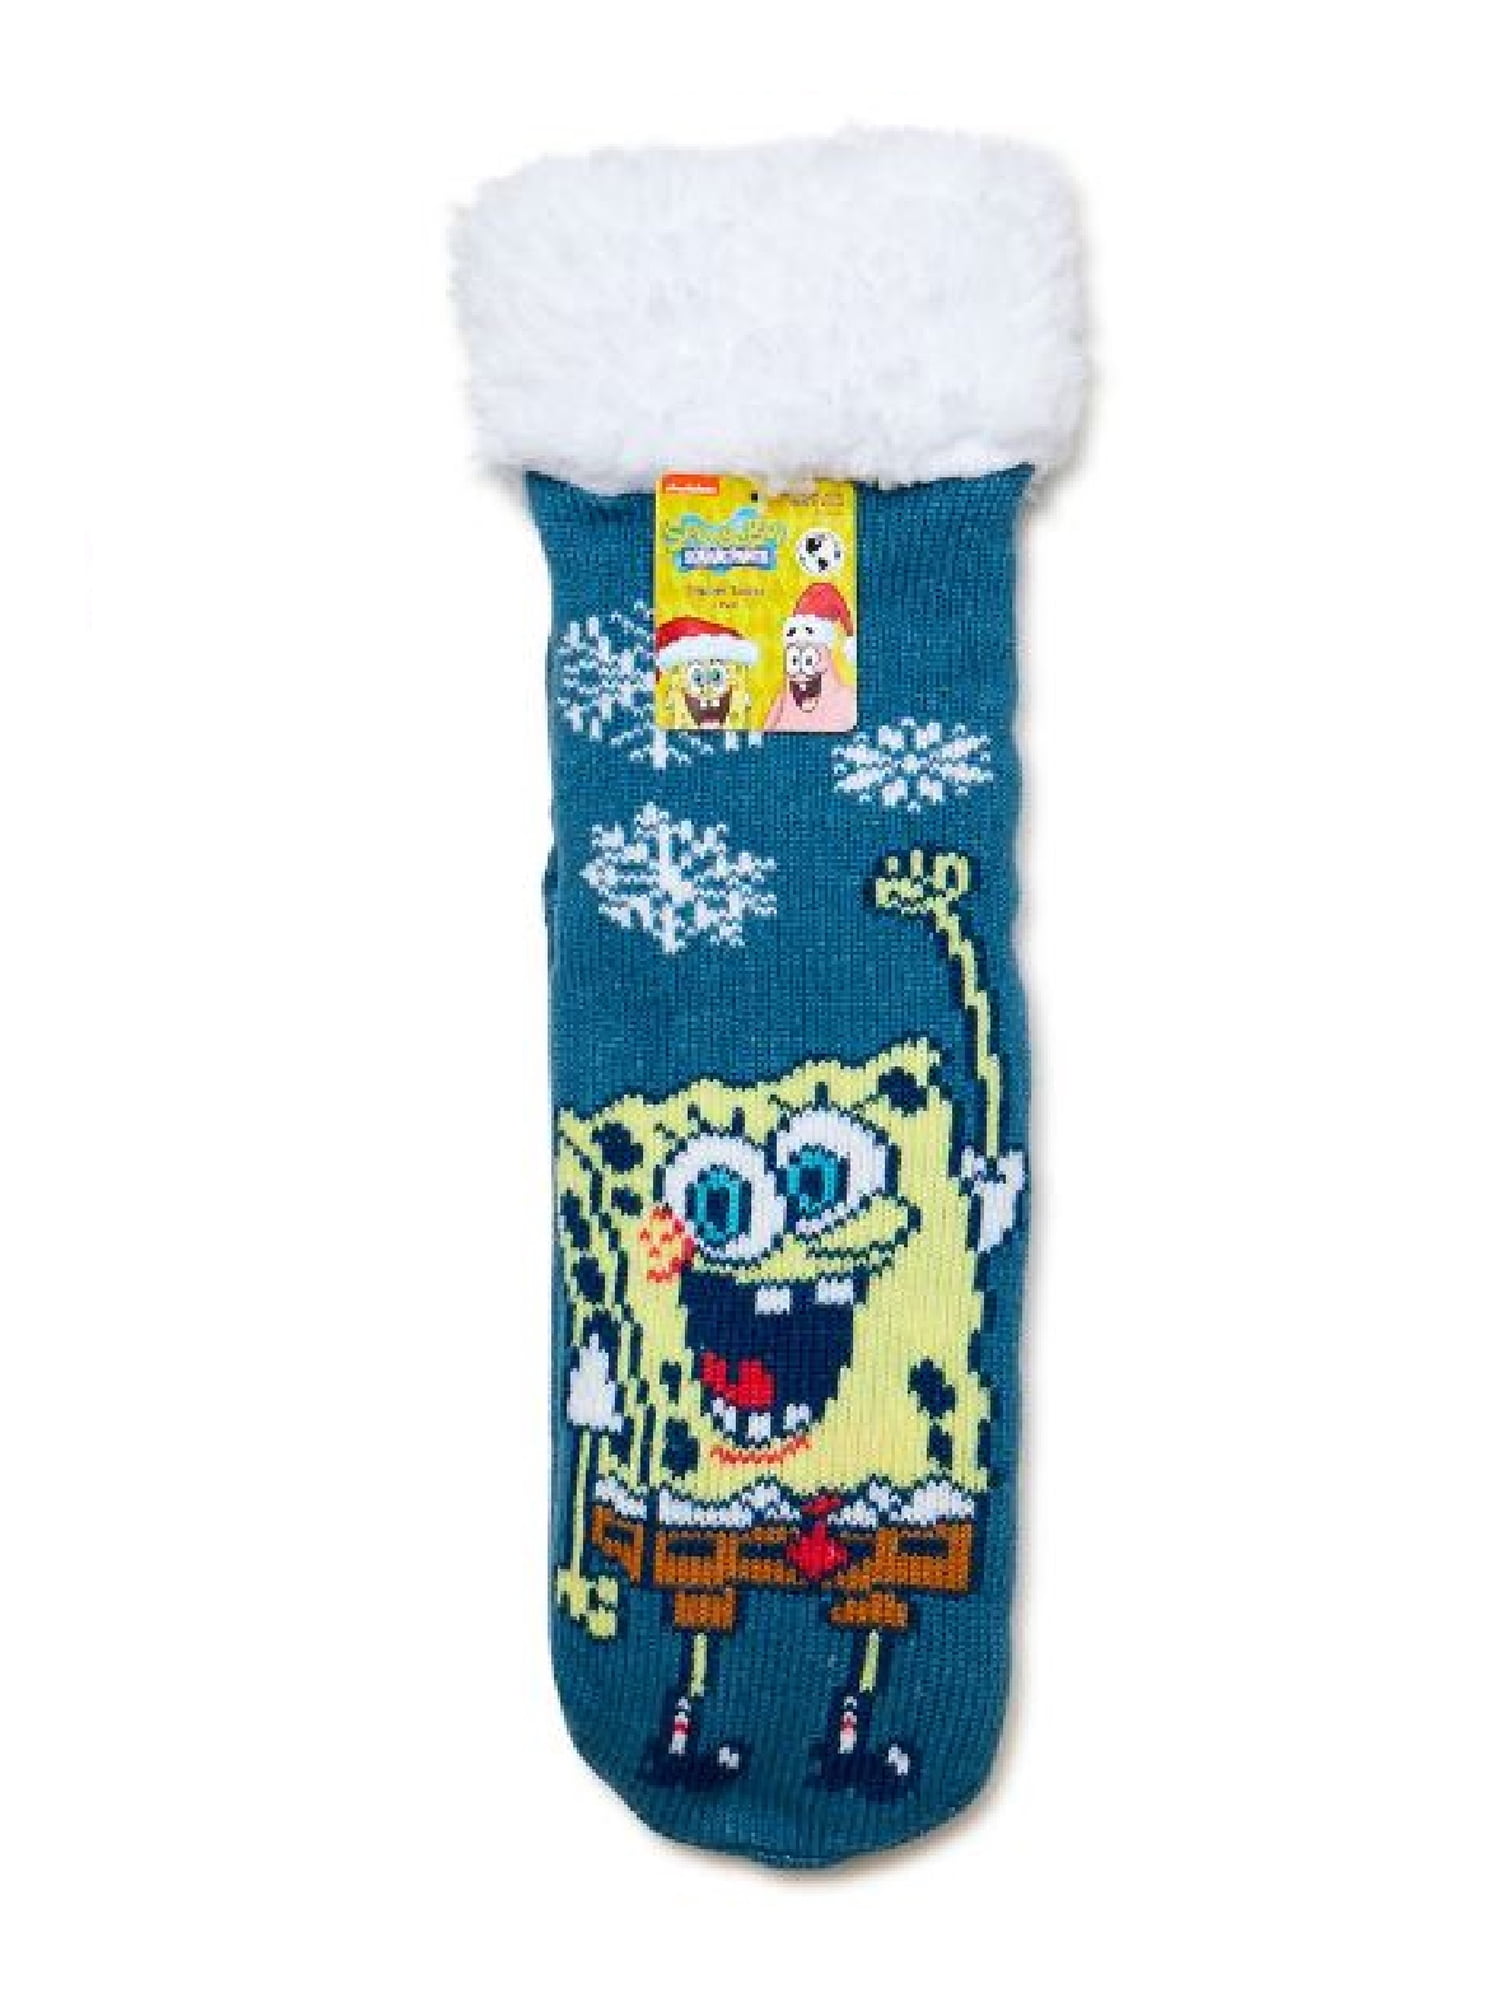 Nickelodeon™ SpongeBob SquarePants™ Cozy Socks - 2 Pack